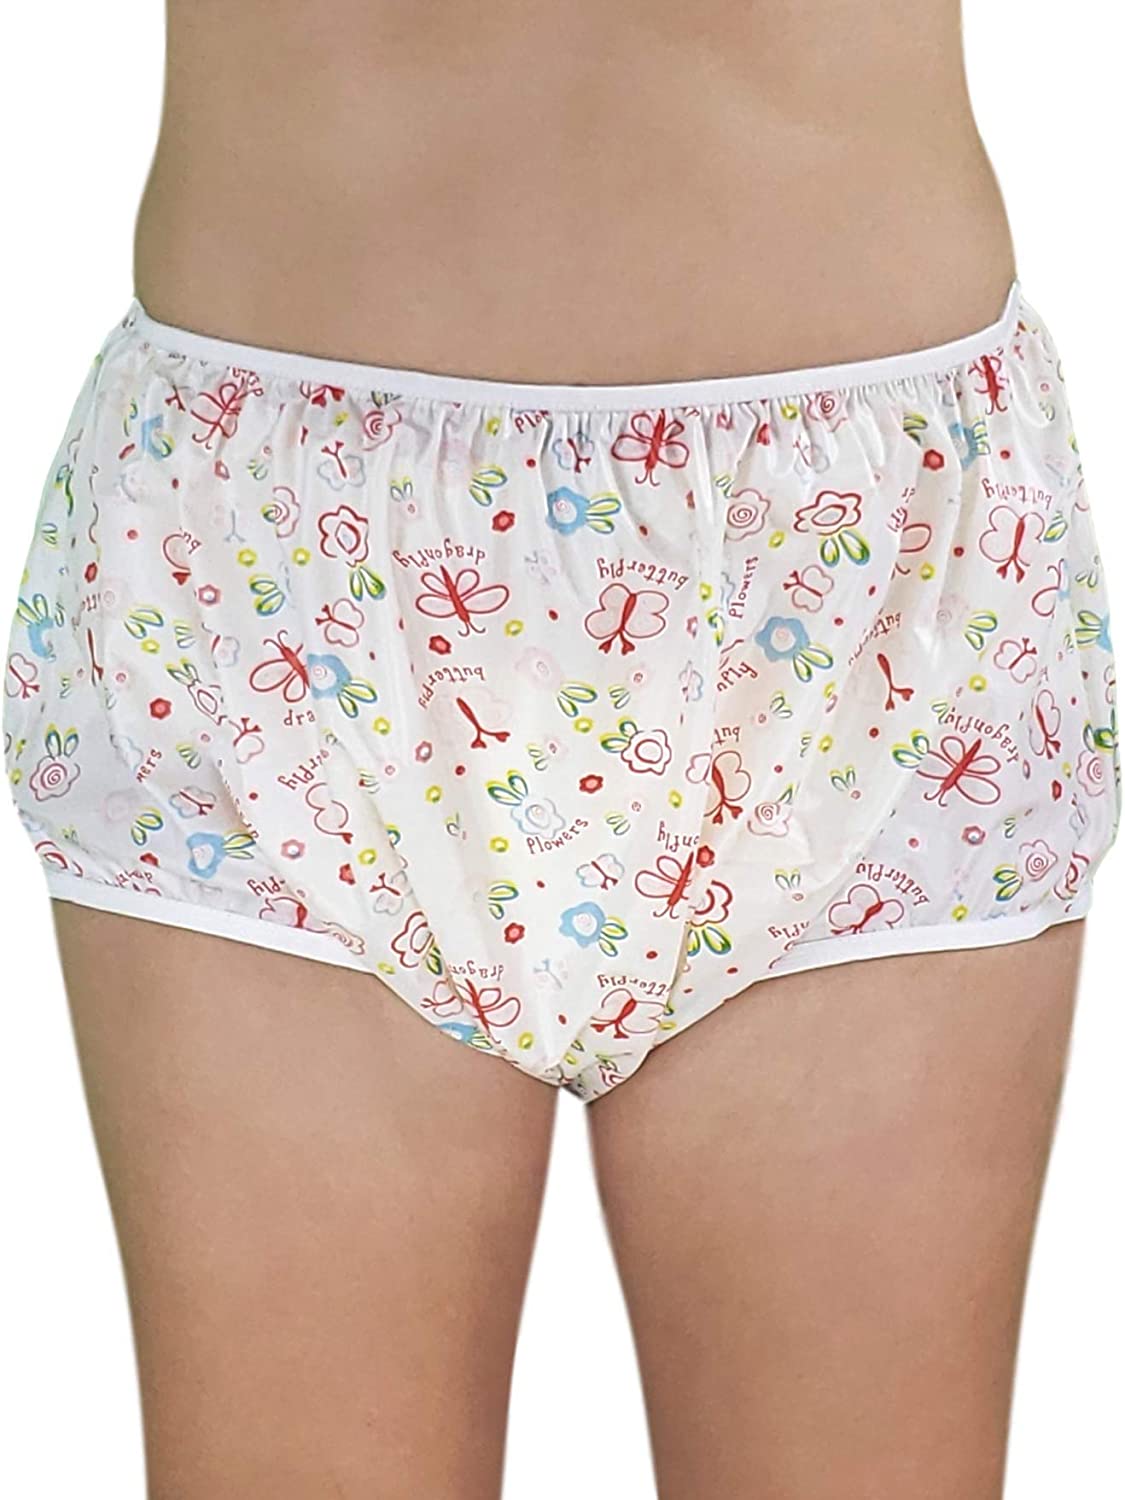 Plastic Pants for Adult Incontinence | Waterproof Rubber Panties & Diaper  Covers – CARERSPK